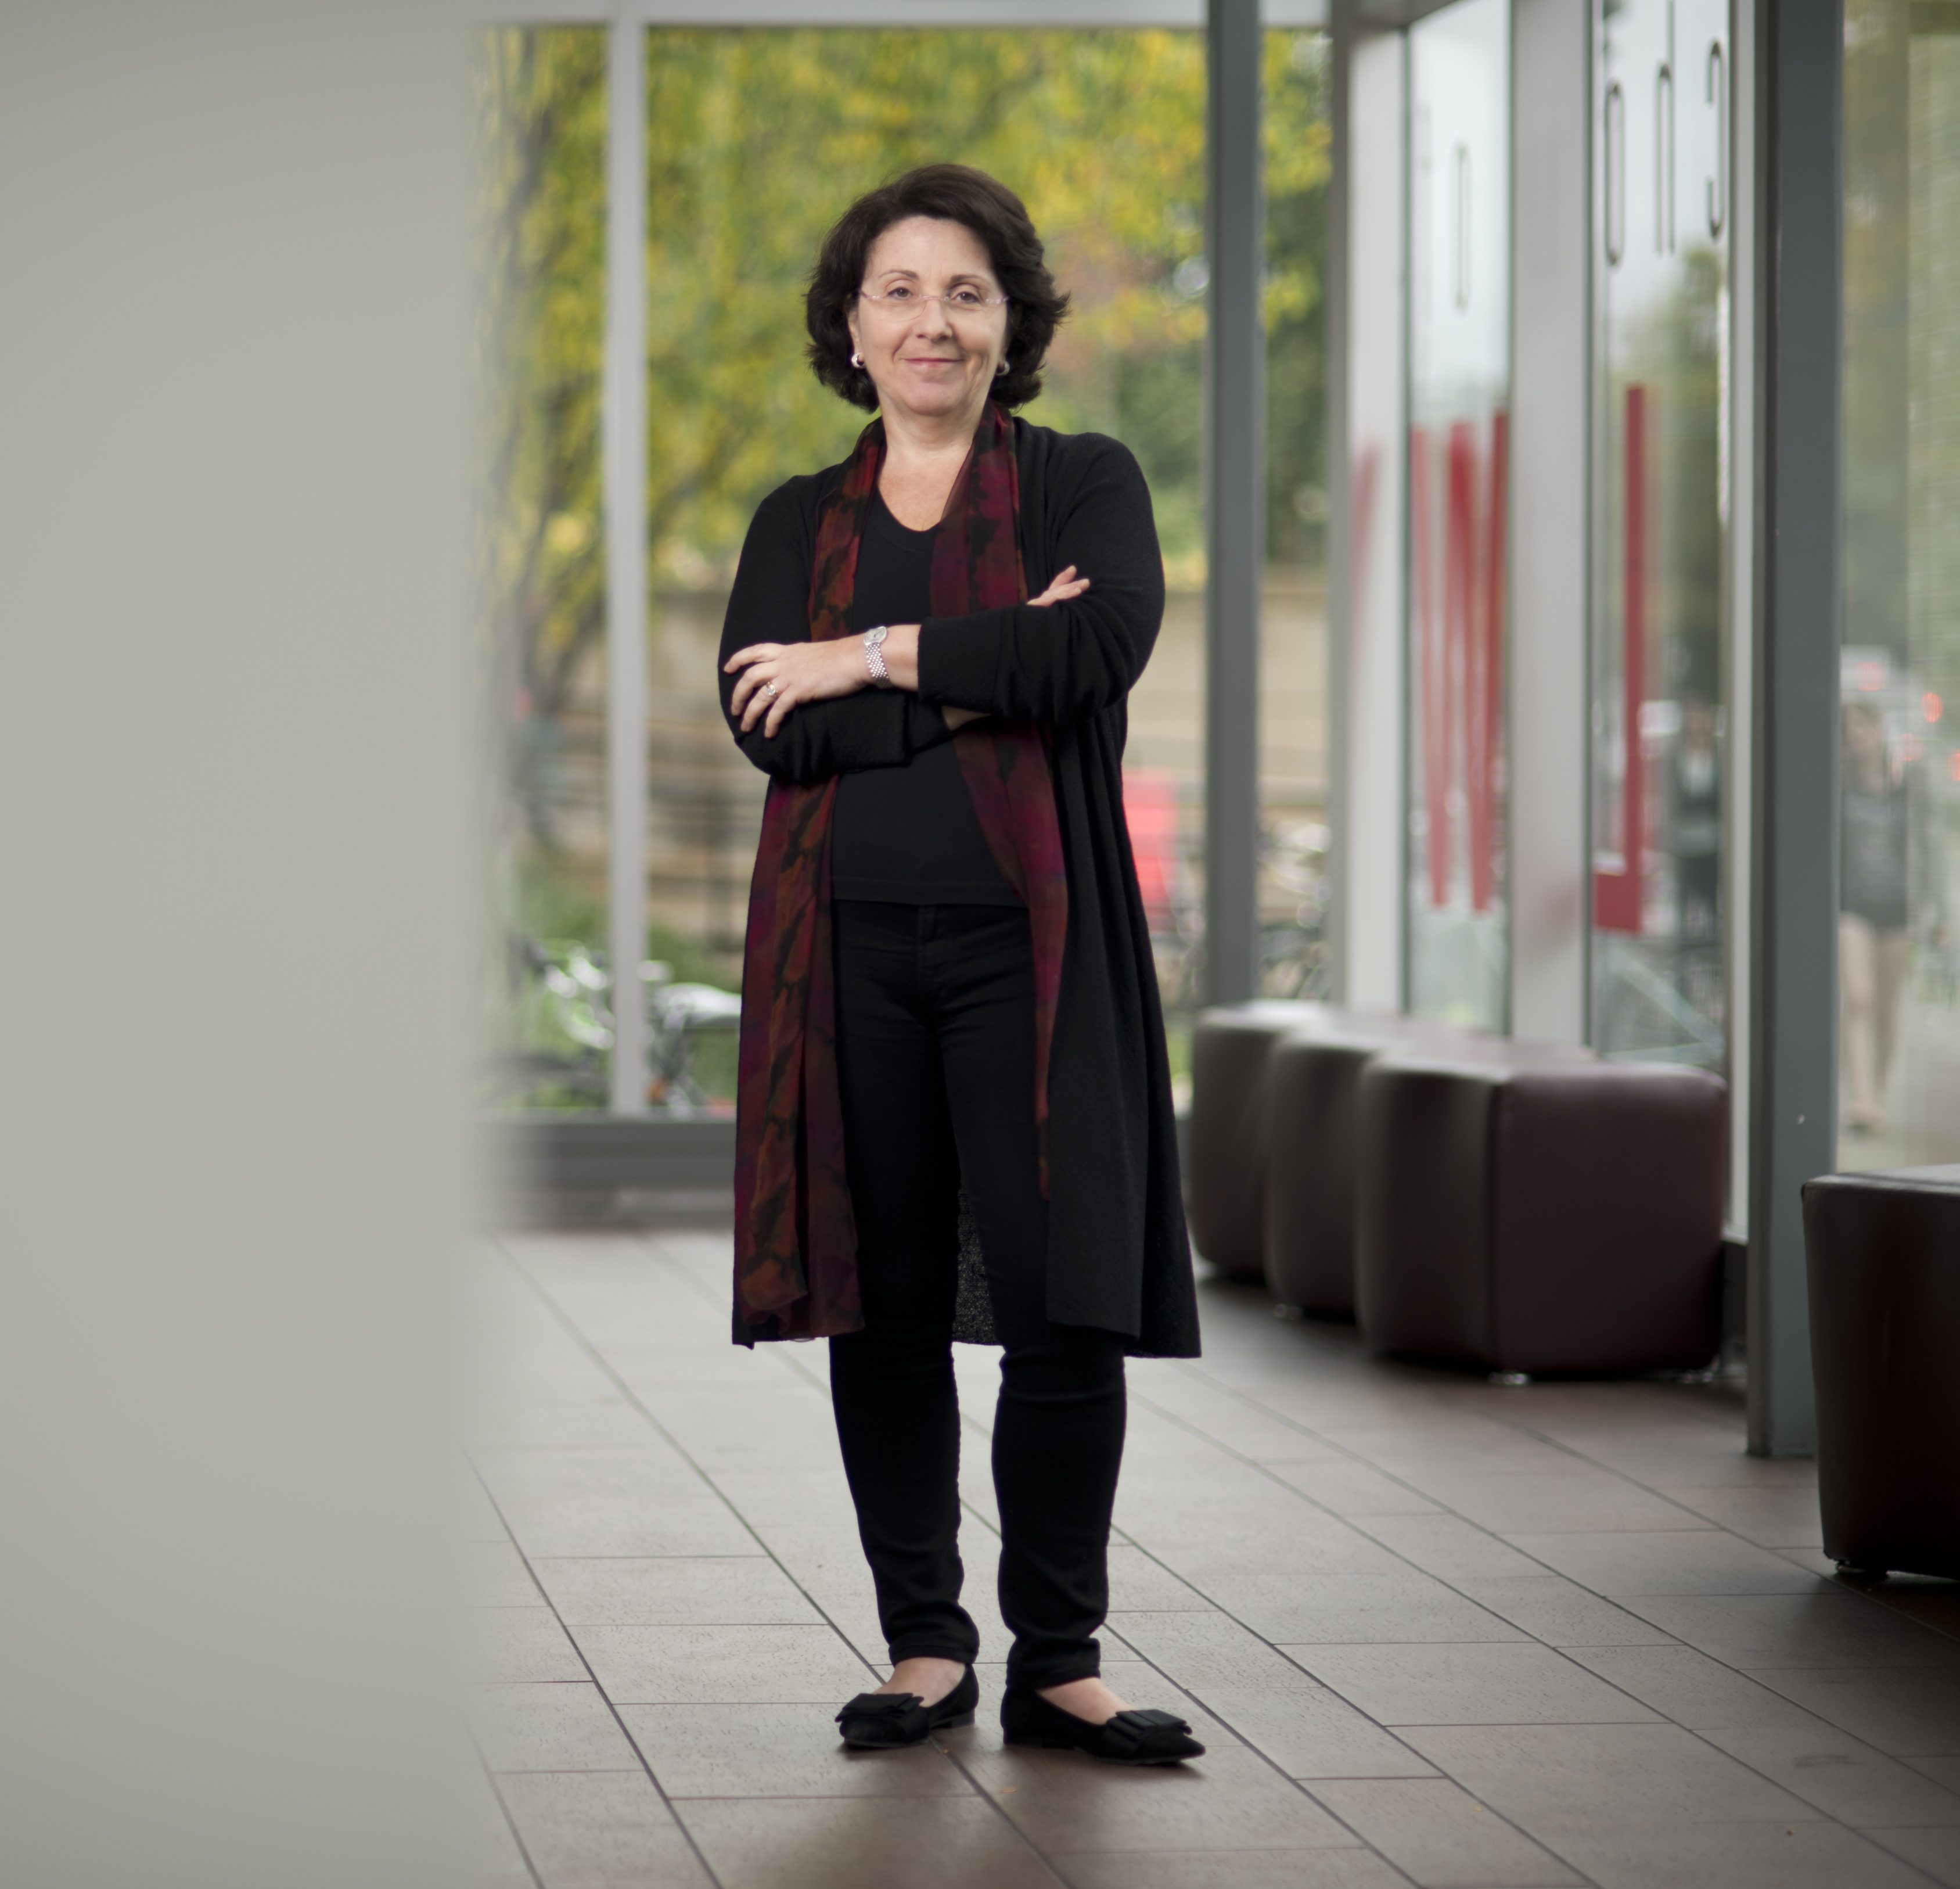 Professor Lisa Feldman Barrett featured in the News@Northeastern